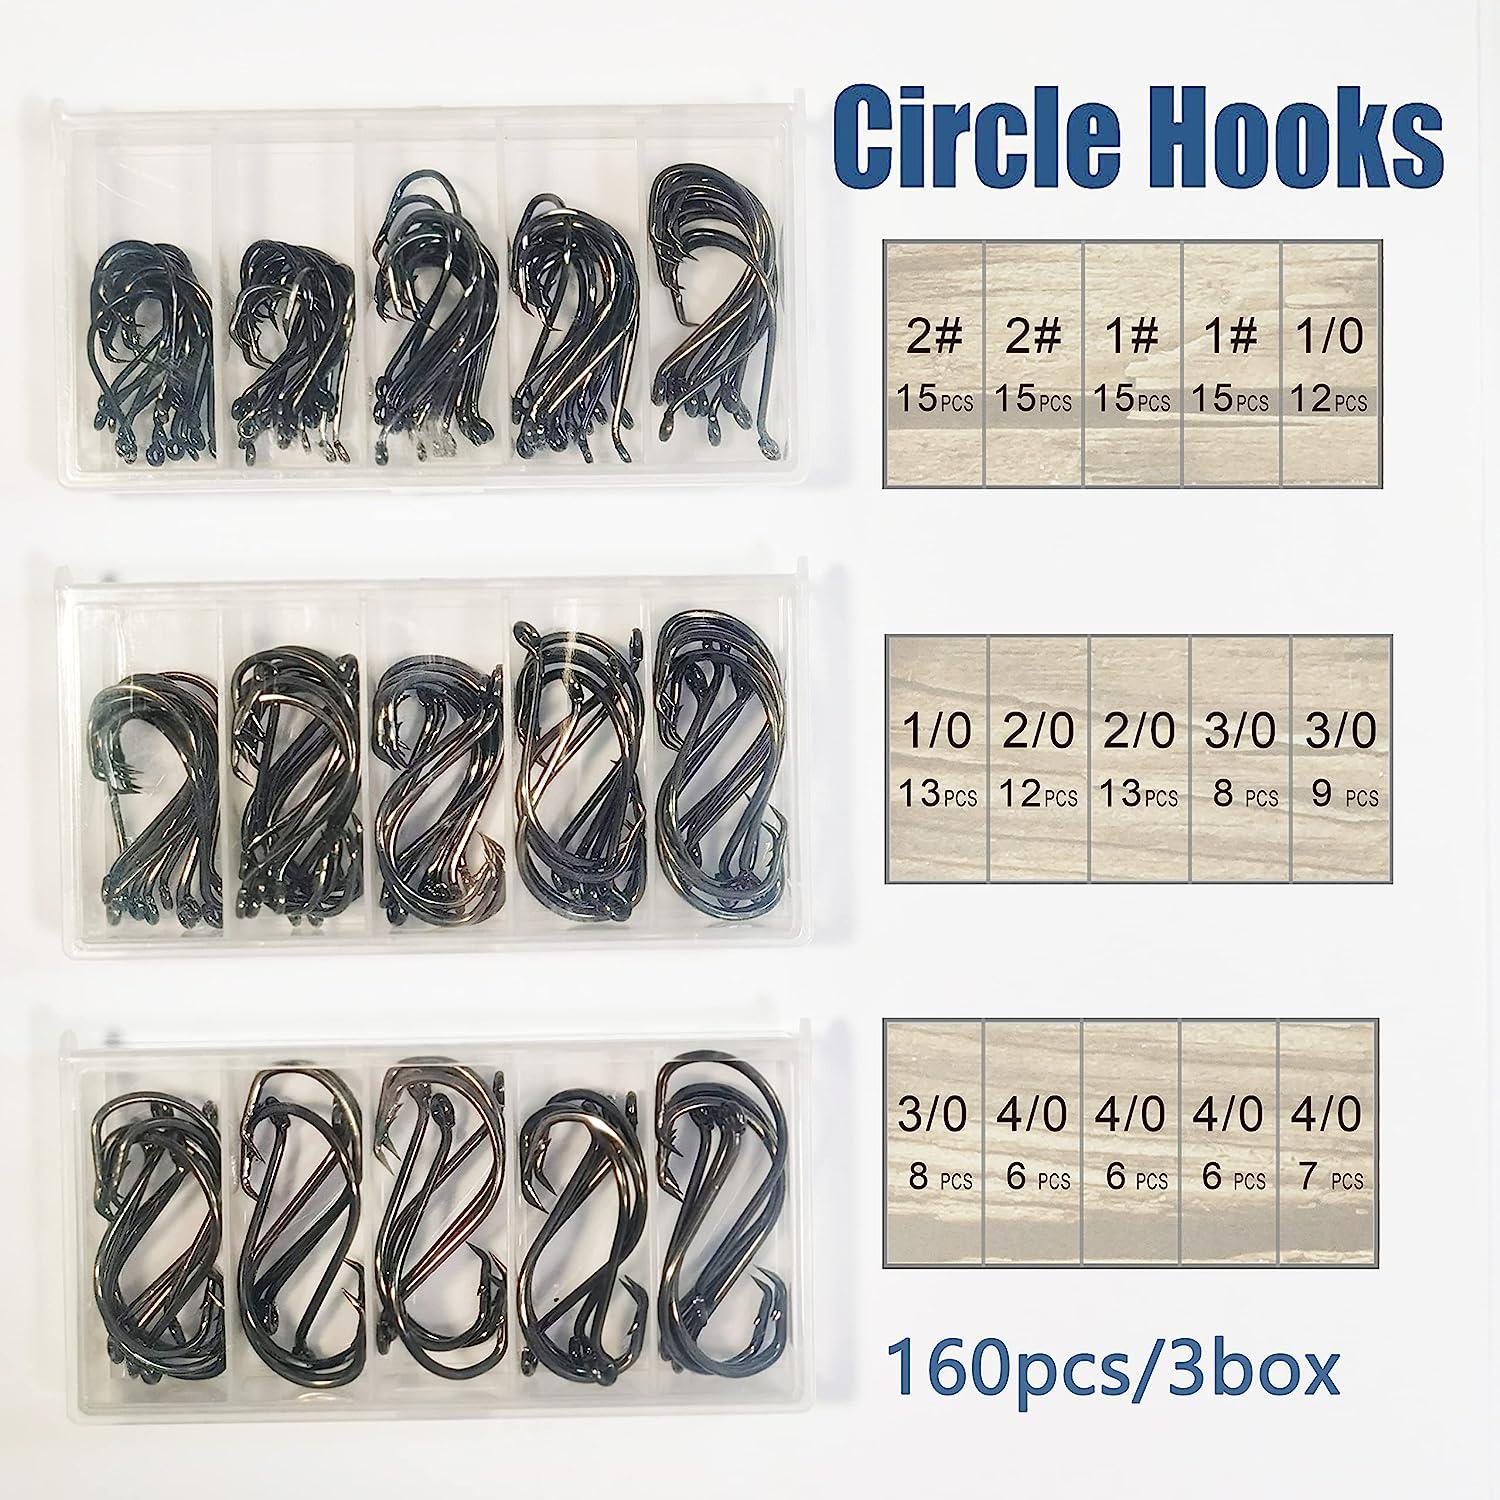 Afmivs Circle Hooks Saltwater Fishing Hooks, 160pcs/Box Circle